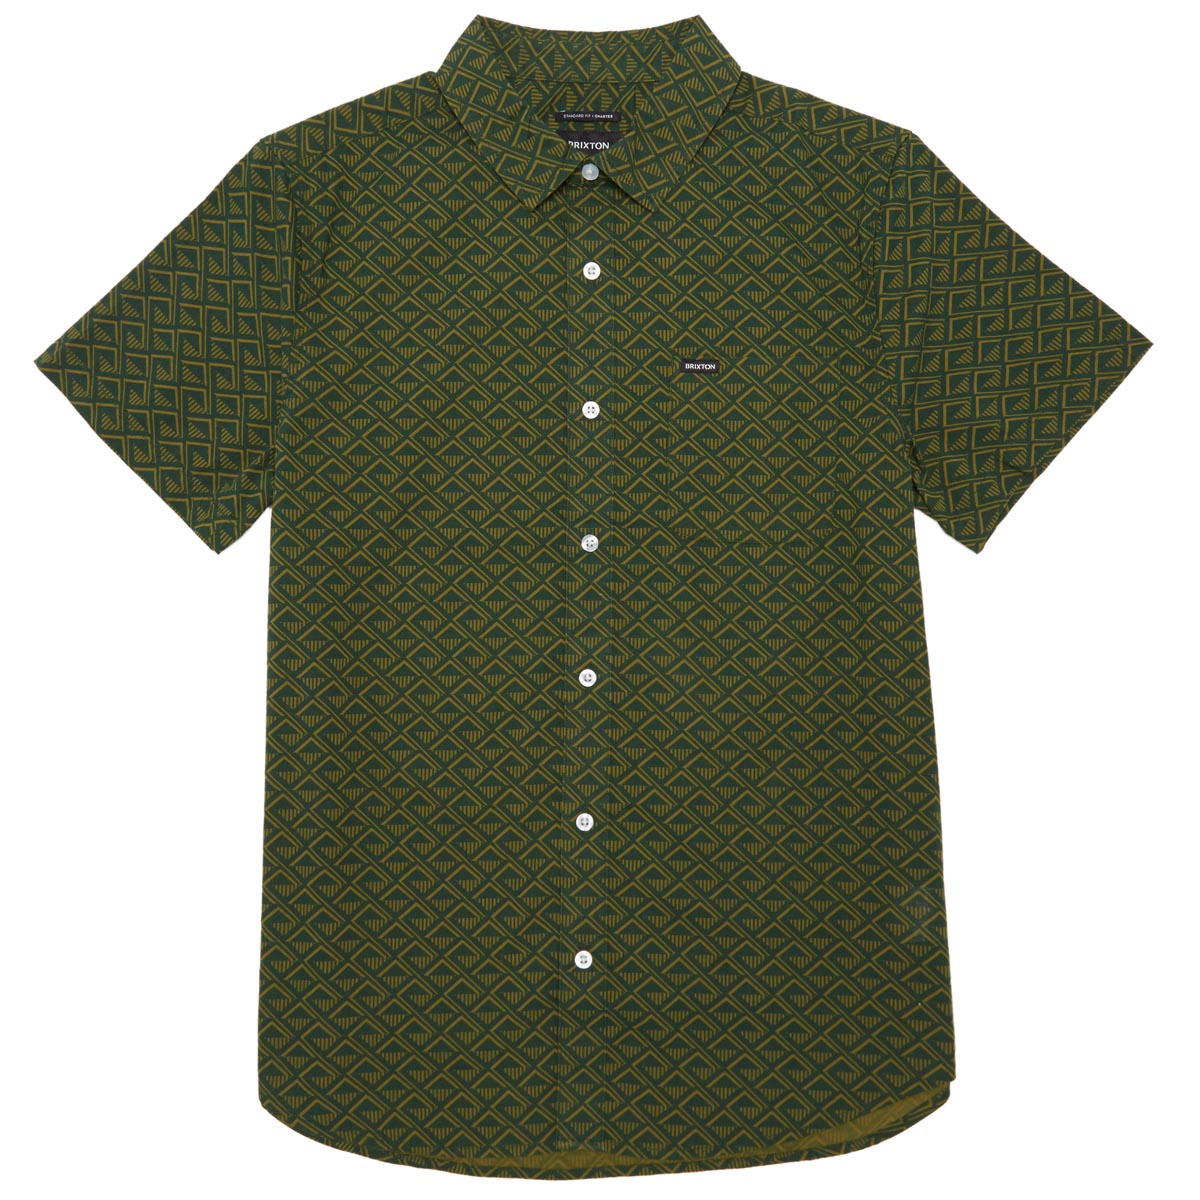 Brixton Charter Print Shirt - Trekking Green Tile image 1